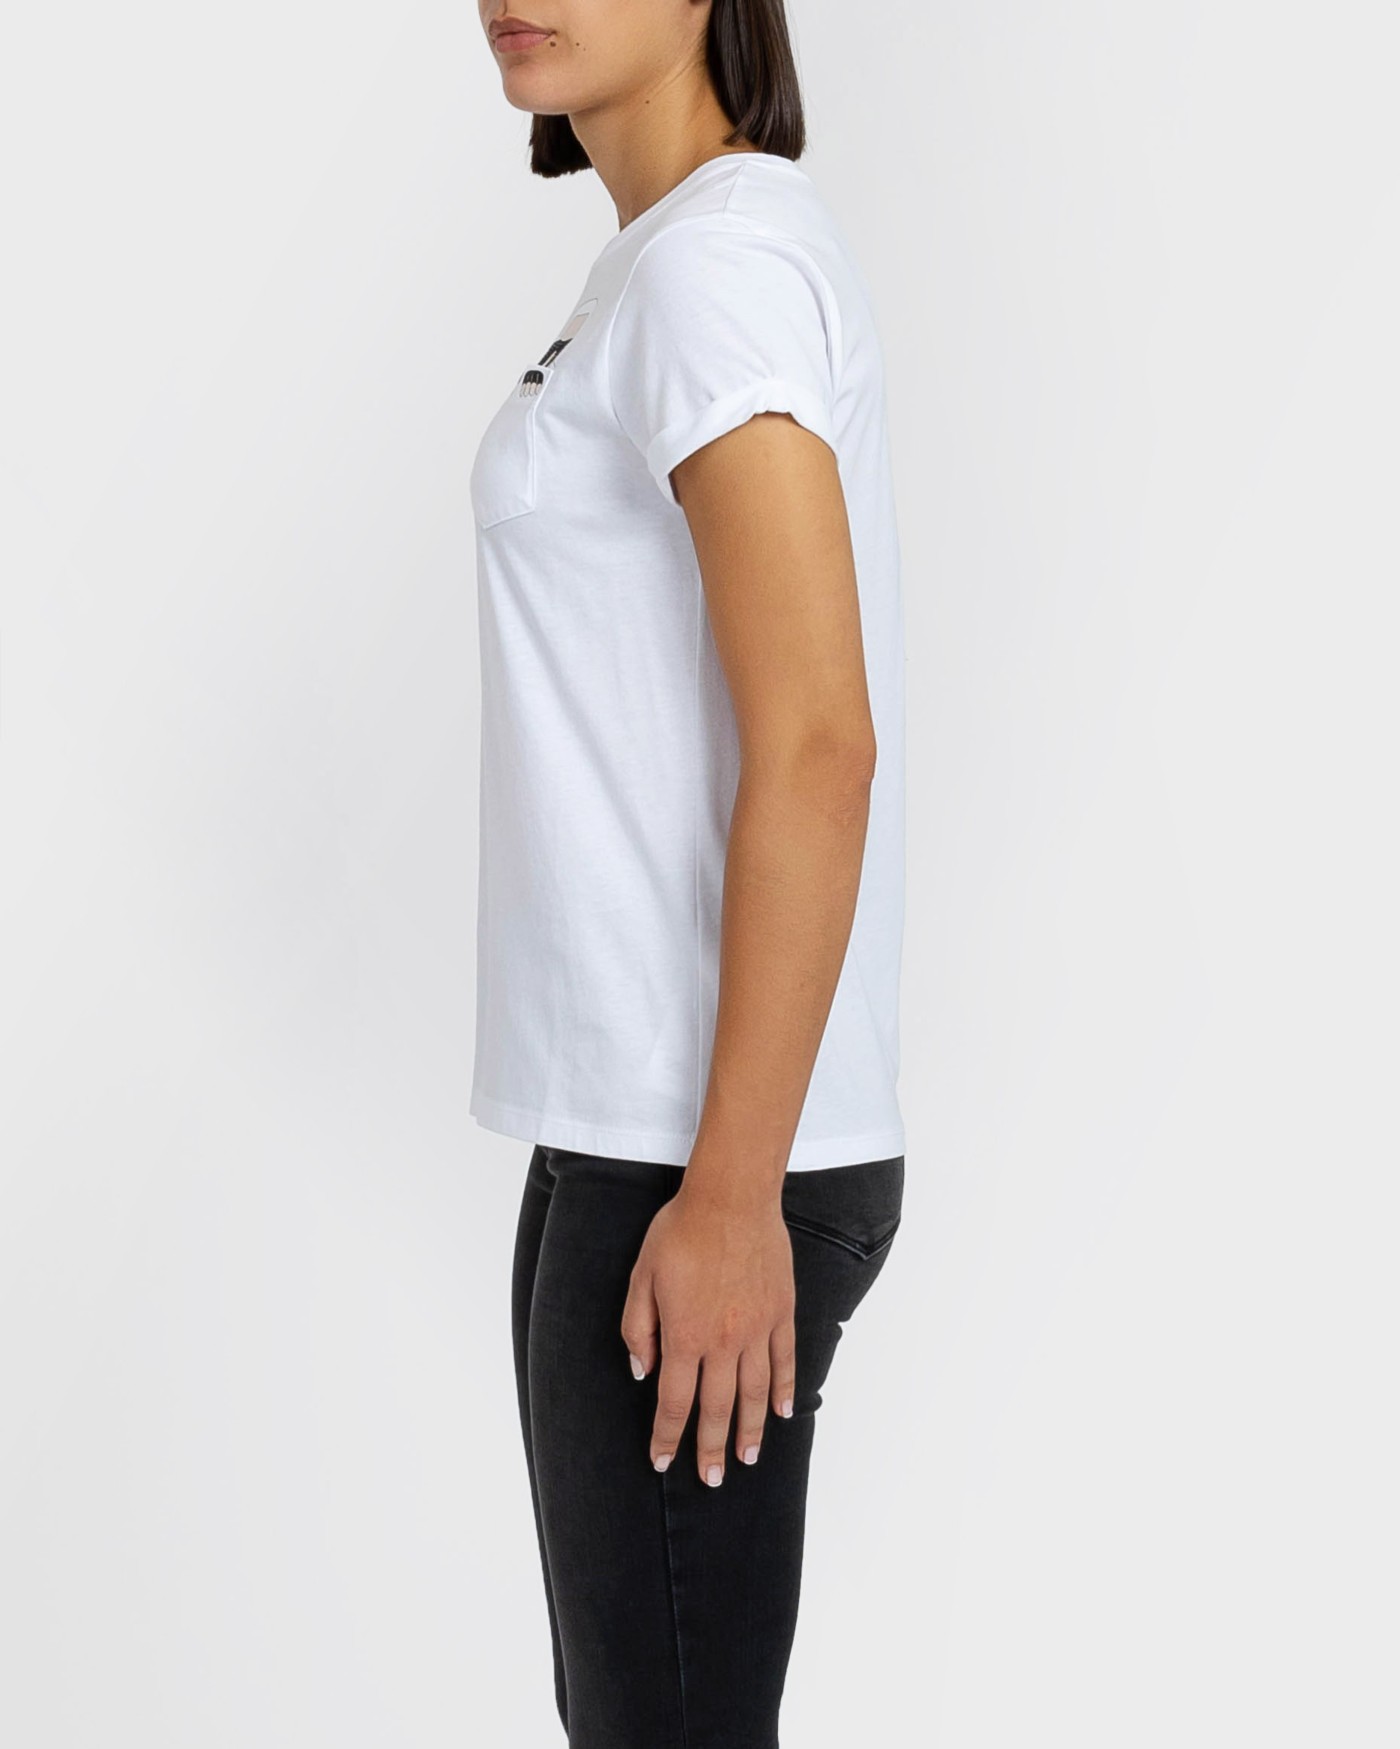 Blusa Aspesi de Algodón de color Gris Mujer Camisetas y tops de Camisetas y tops Aspesi 